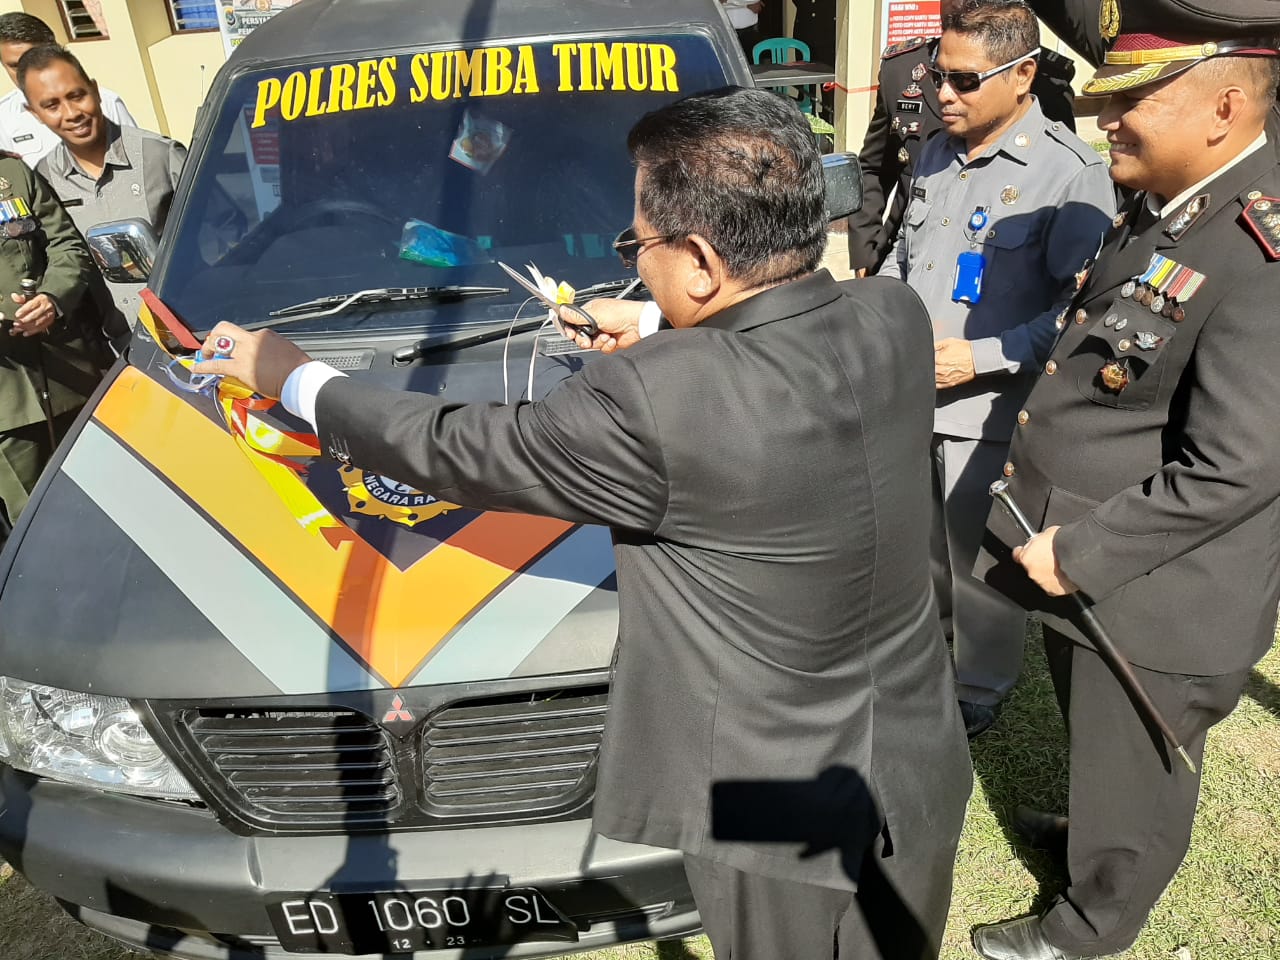 Mobil SKCK Keliling Polres Sumba Timur Siap Jangkau Seluruh Kecamatan di Kabupaten Sumba Timur